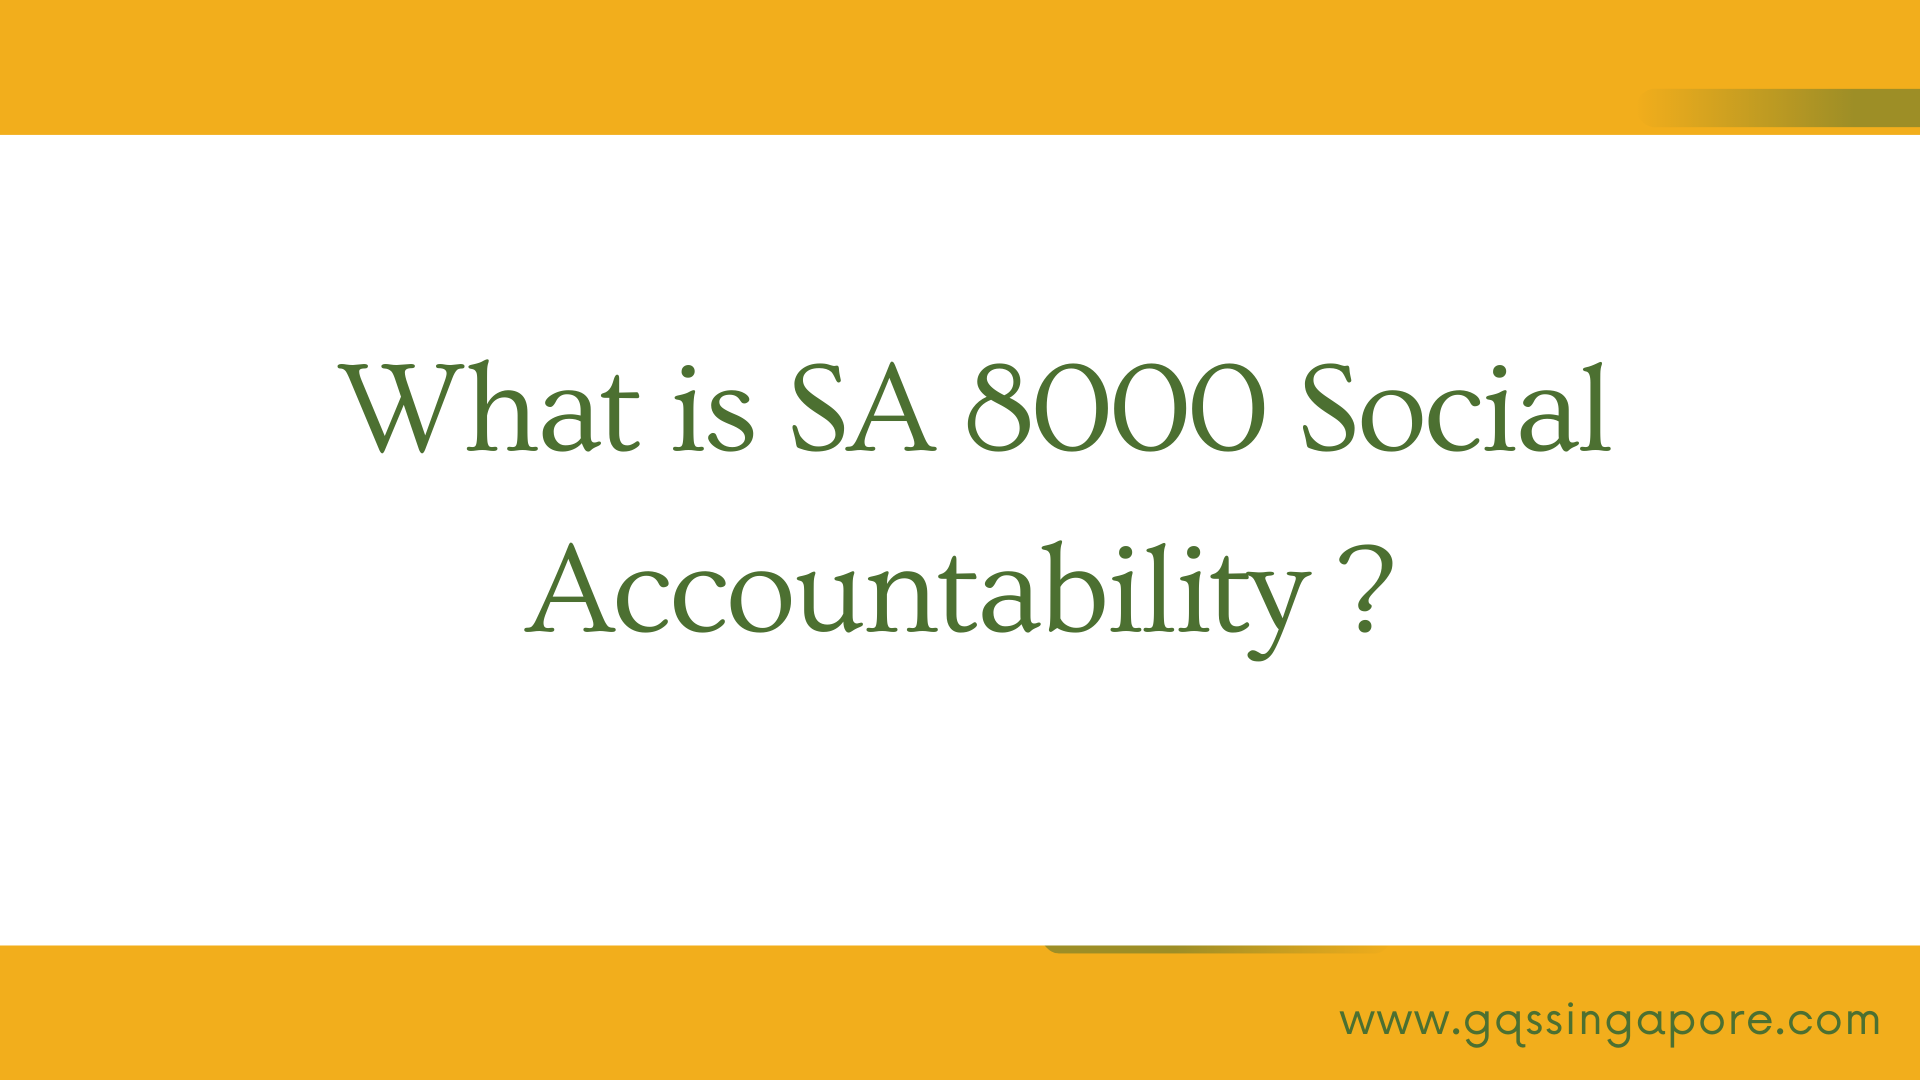 SA8000 Social Accountability